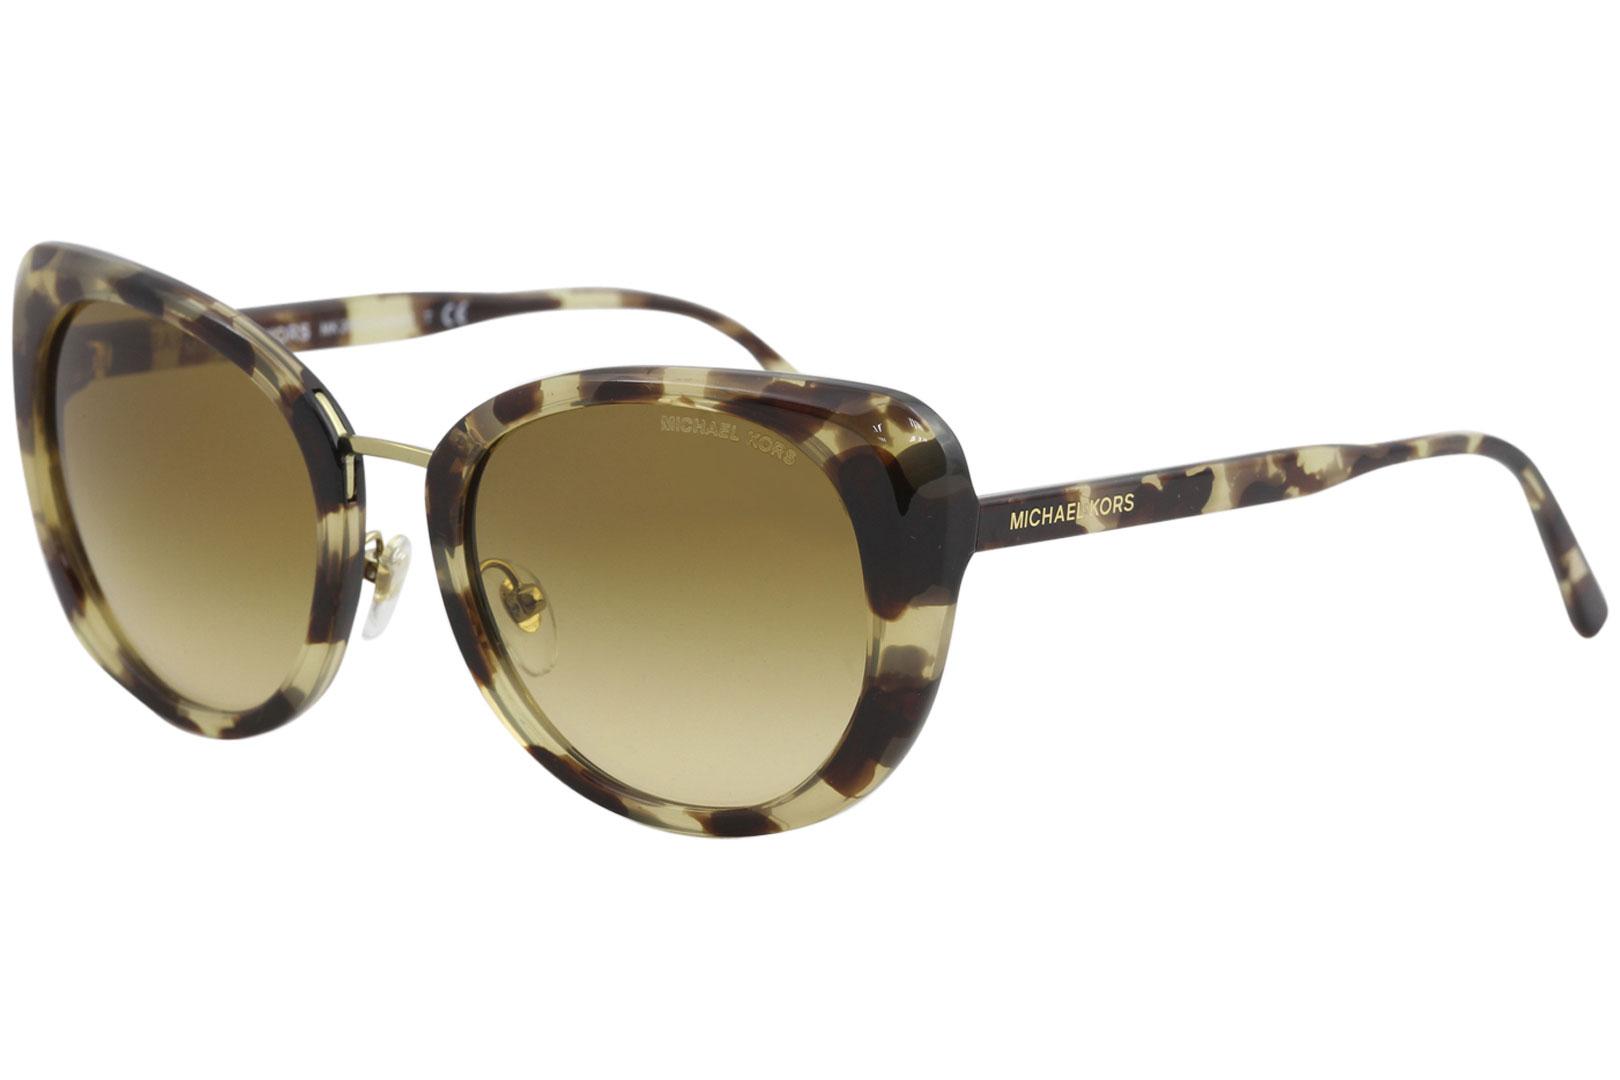 Michael Kors Women's Lisbon MK2062 MK/2062 Fashion Round Sunglasses - Tokyo Tortoise/Gold Gradient   33232L - Lens 52 Bridge 20 Temple 140mm